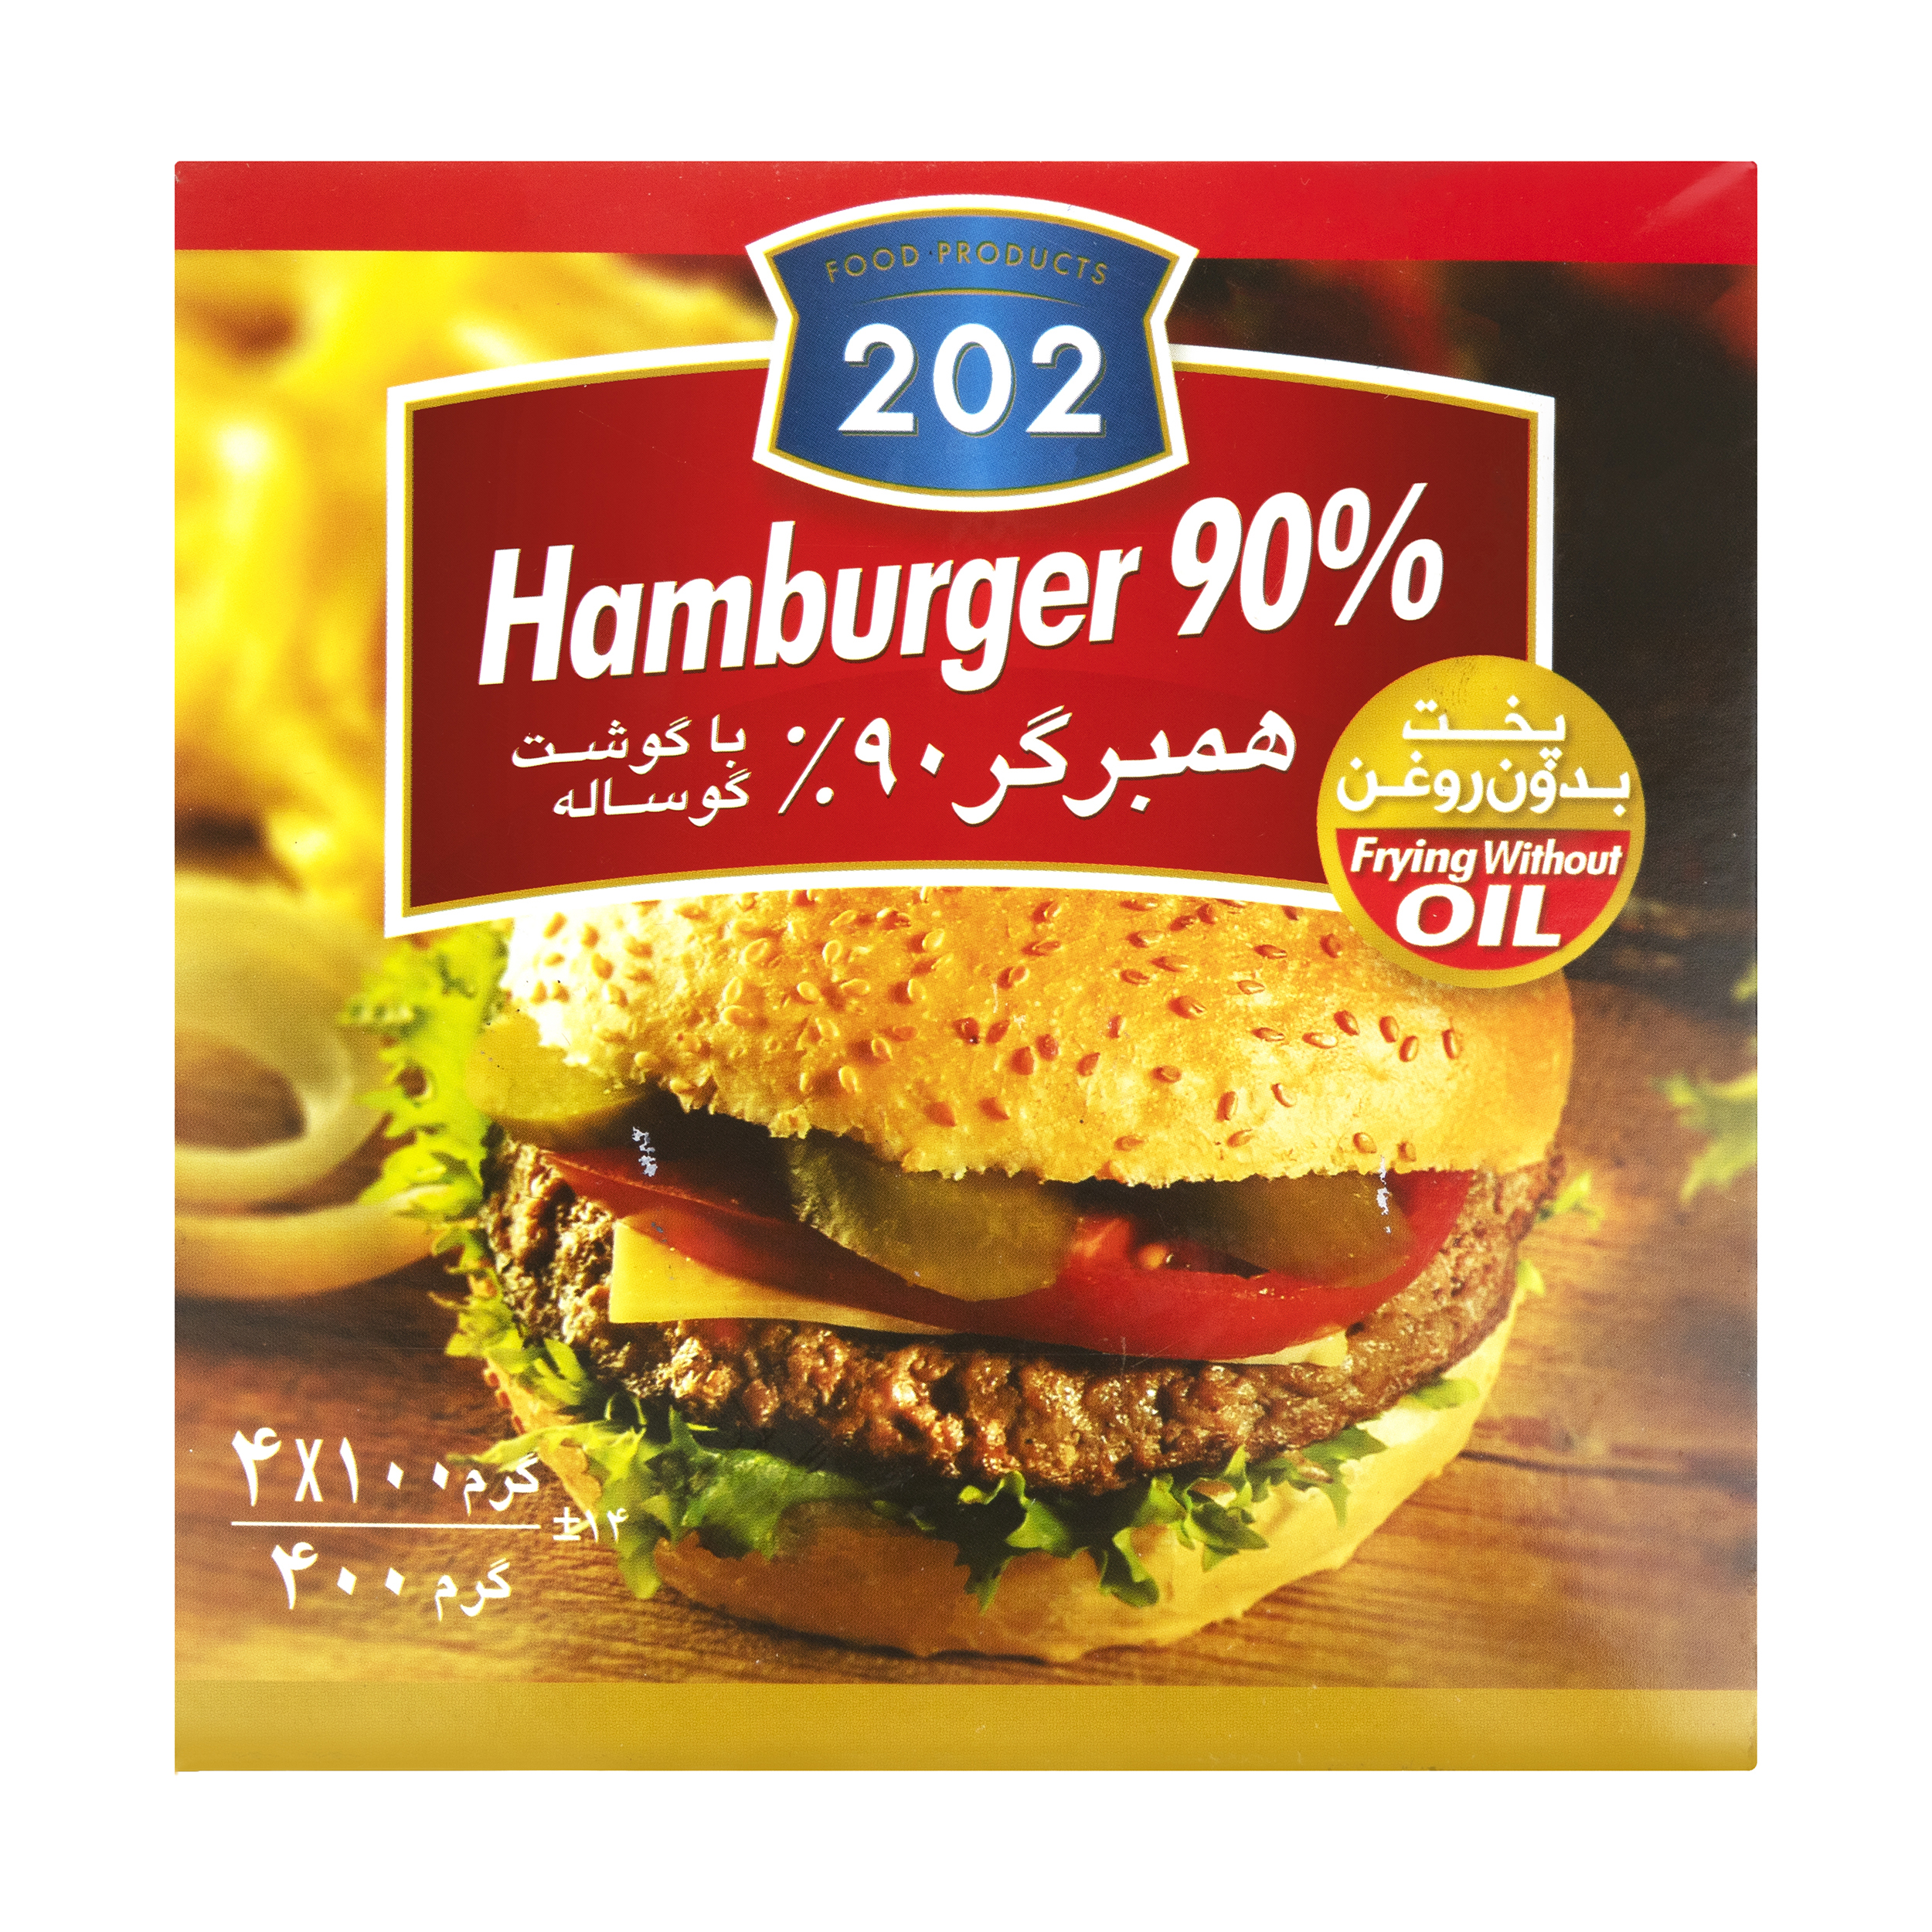 همبرگر 90 درصد گوشت گوساله 202 - 400 گرم 